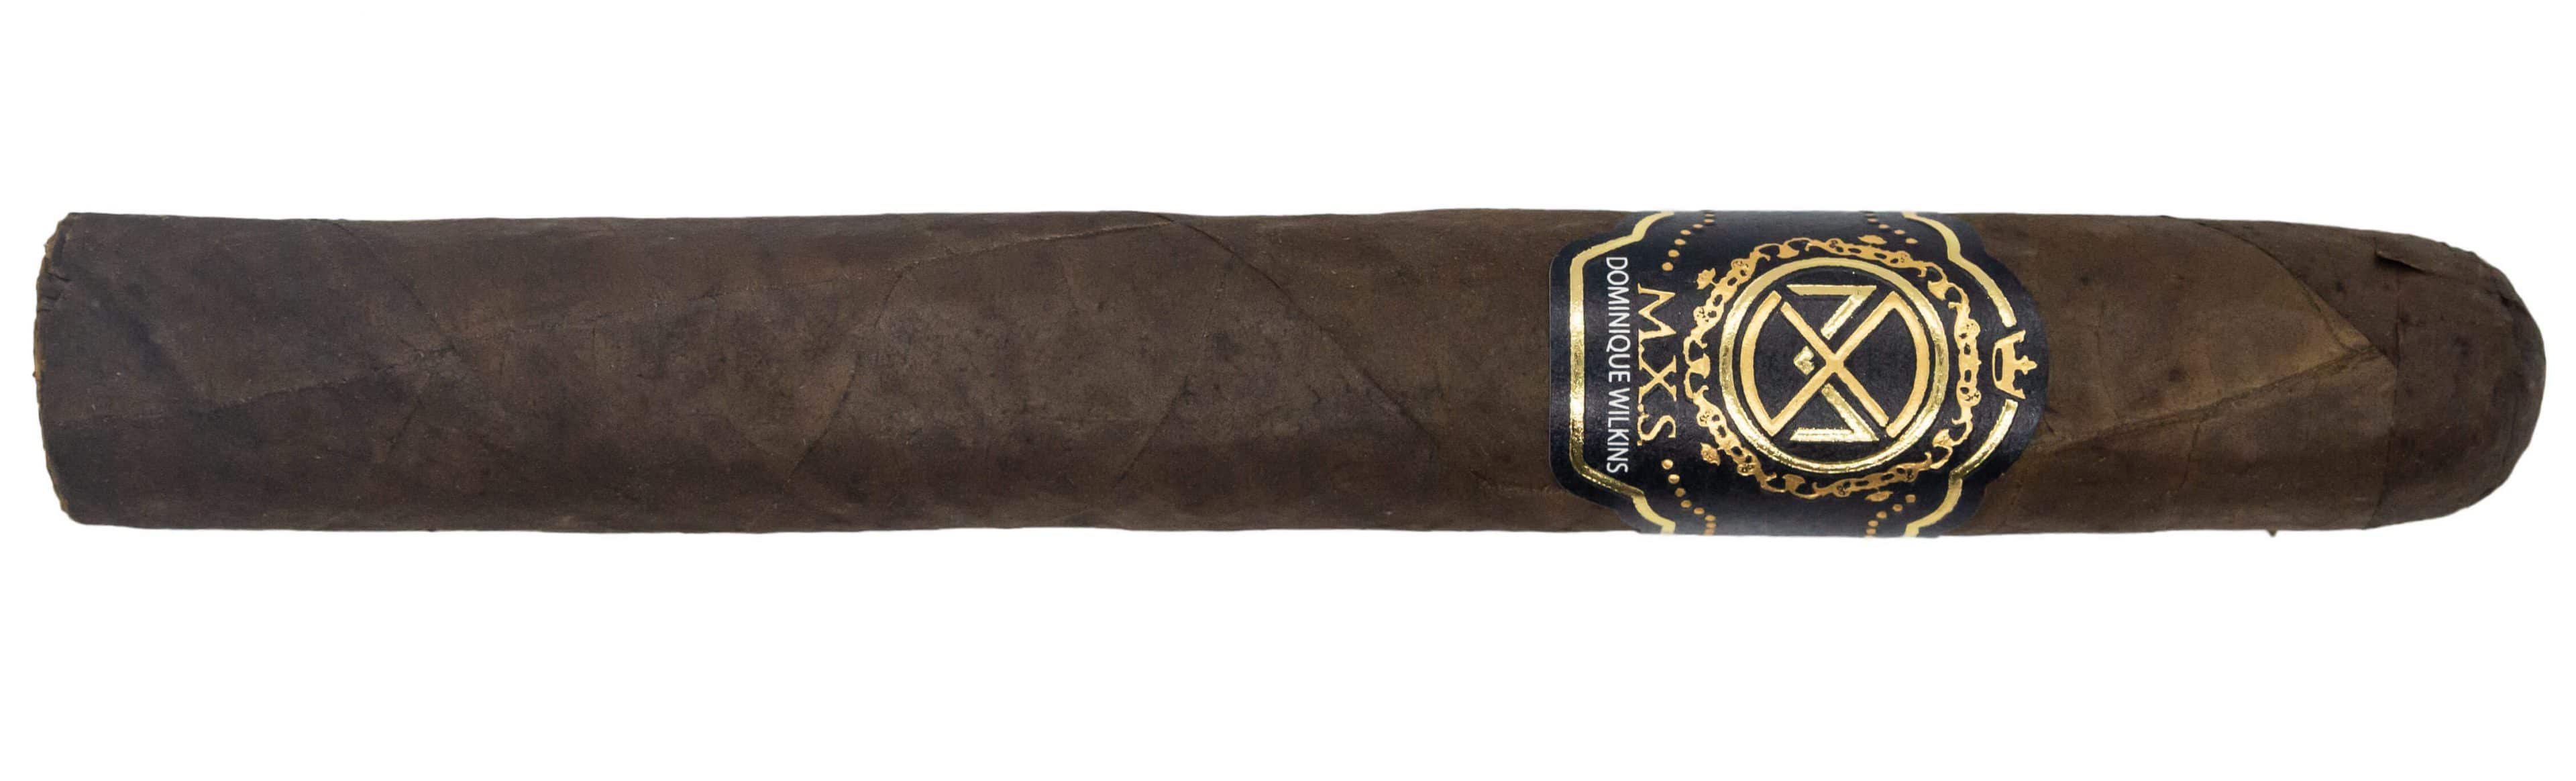 Blind Cigar Review: A.C.E. Prime | M.X.S. by Dominique Wilkins